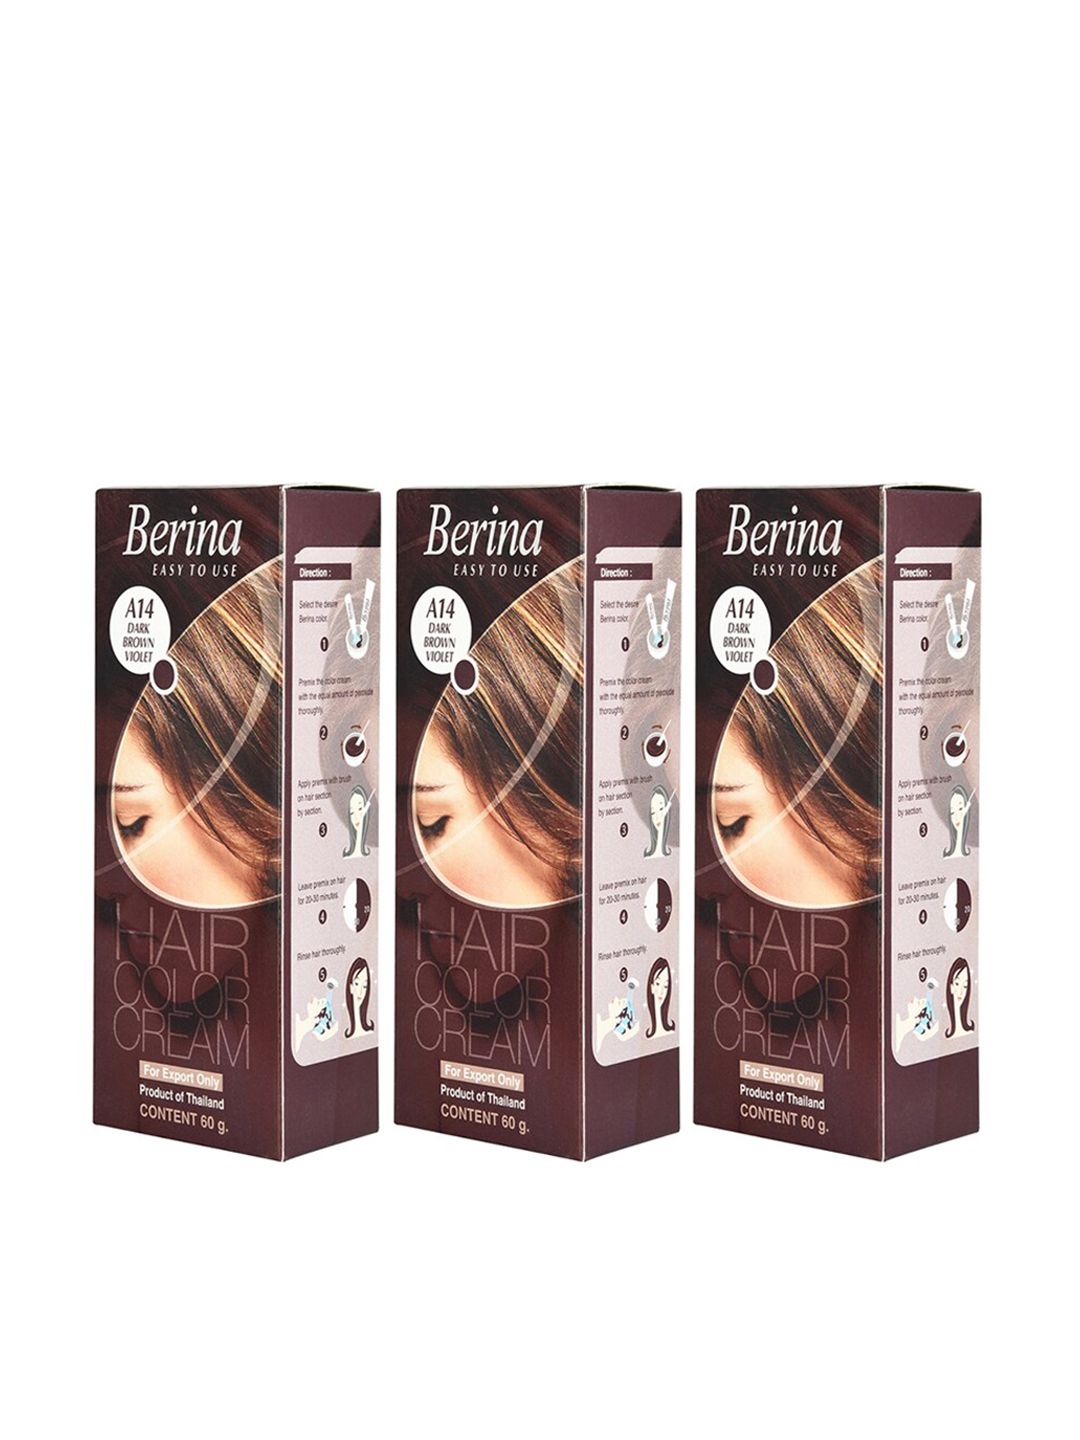 Berina Pack of 3 A14 Dark Brown Violet Hair Color Cream - 60gm Each Price in India